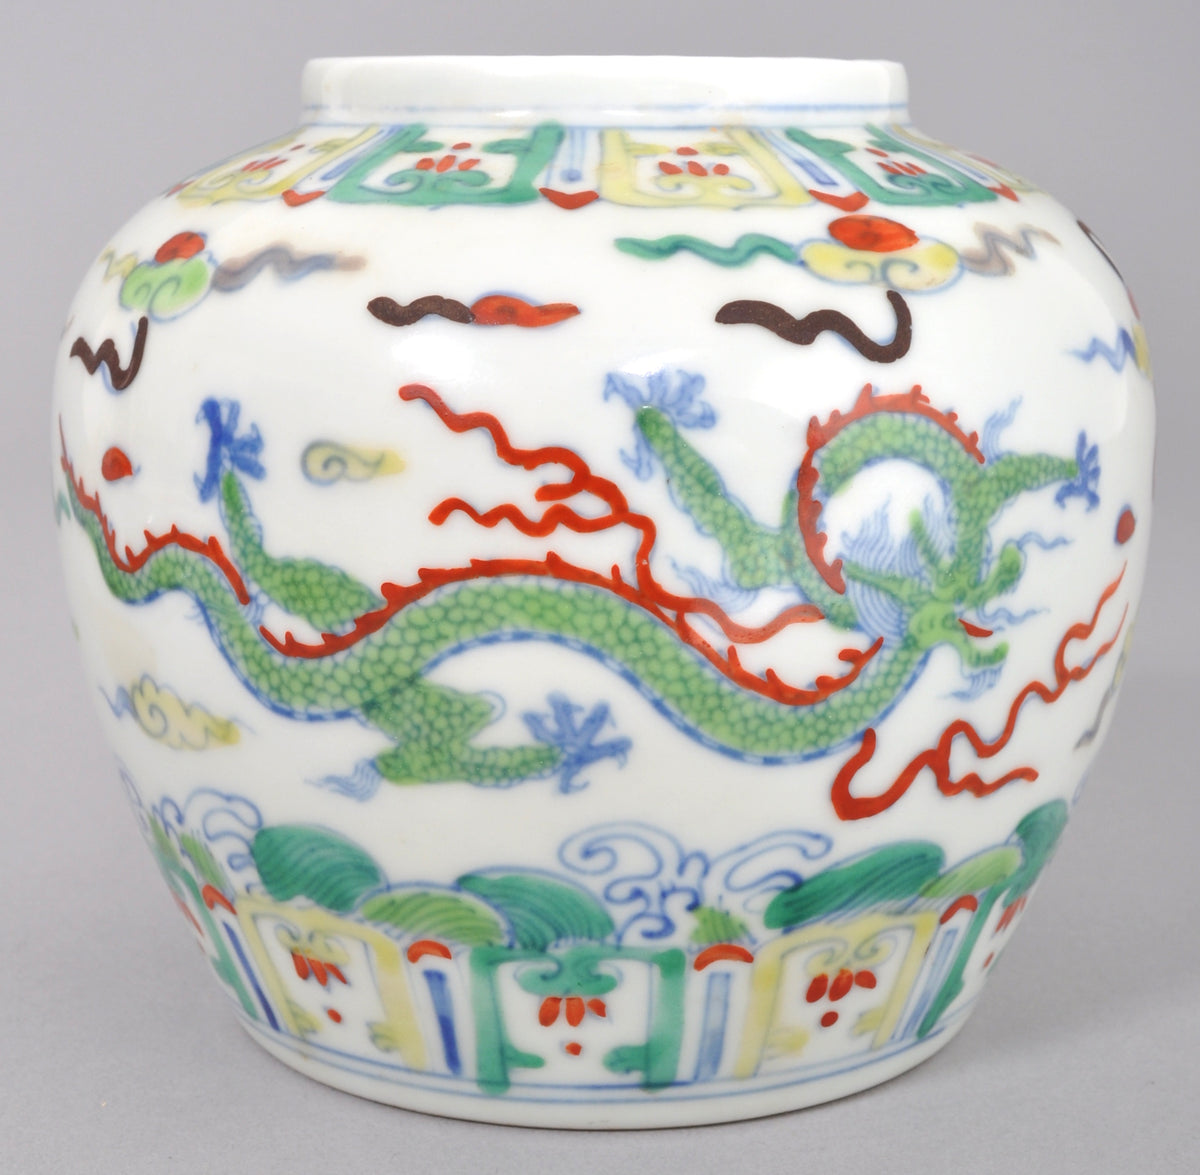 Antique Chinese Republic Period Doucai Jar with Dragons, Circa 1920